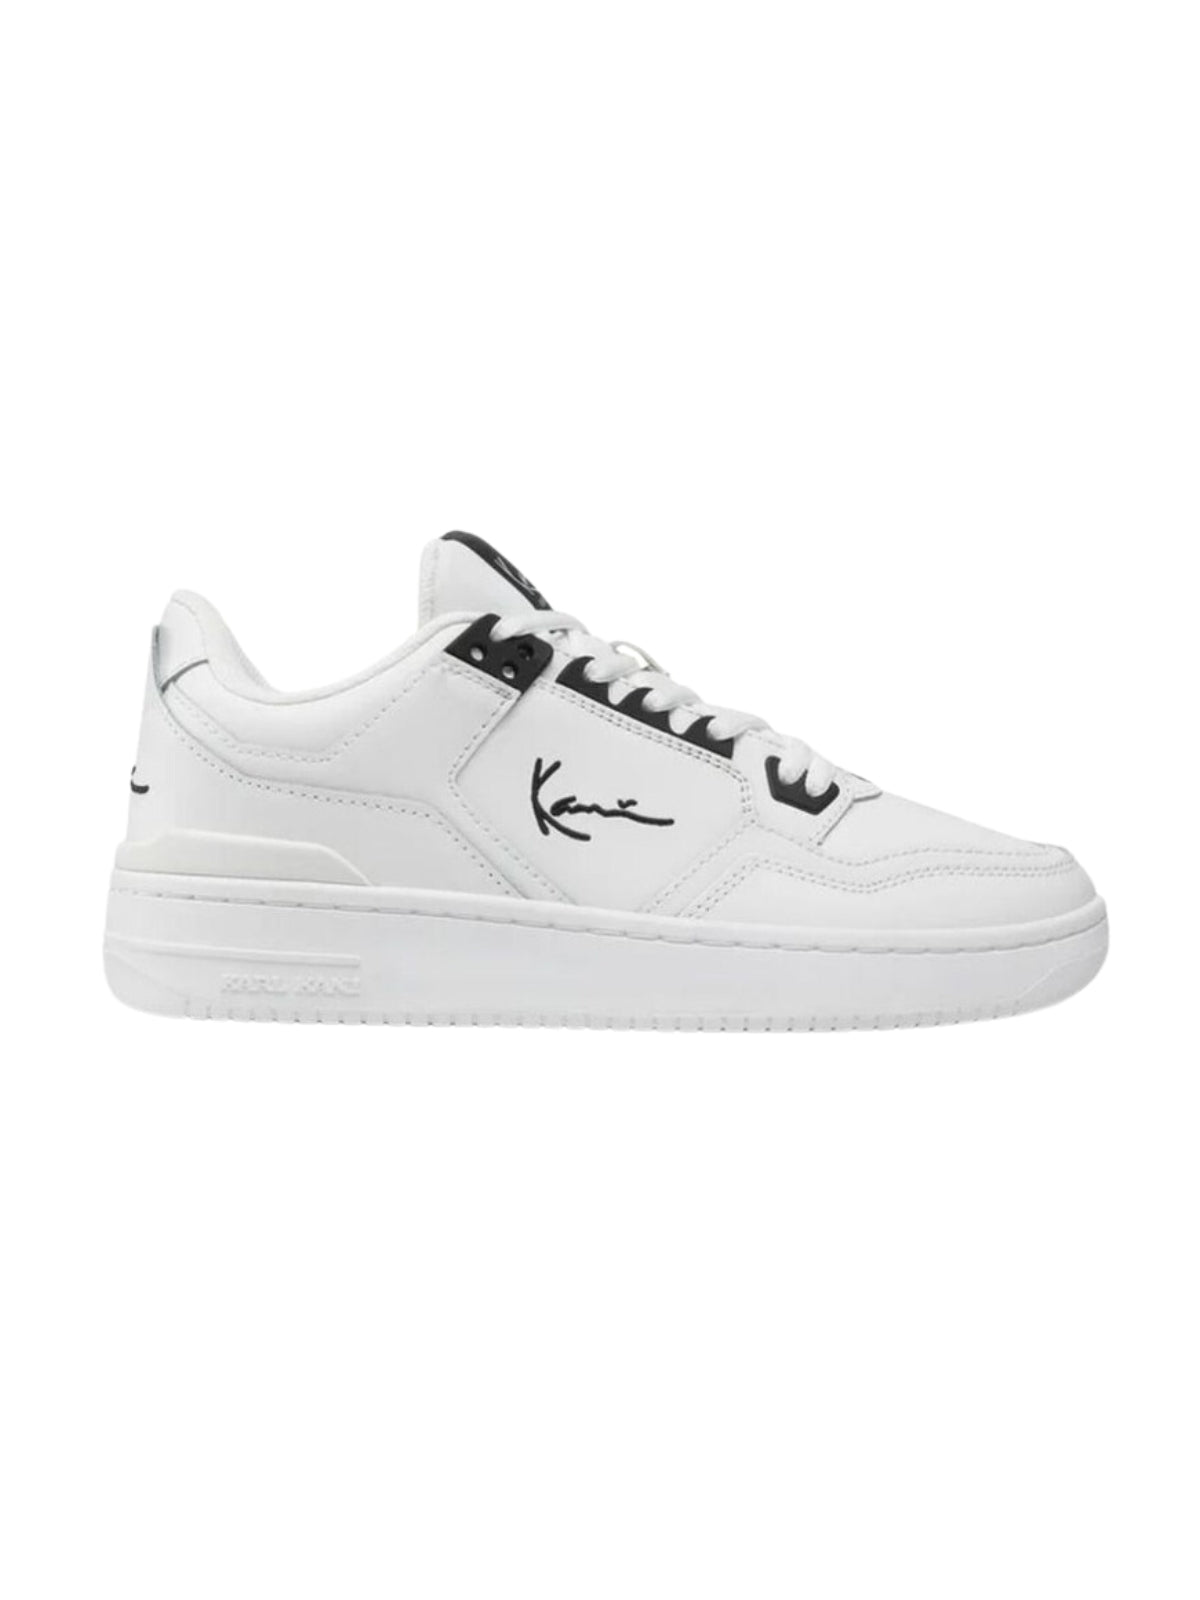 Karl Kani Sneaker Luxury White-Black